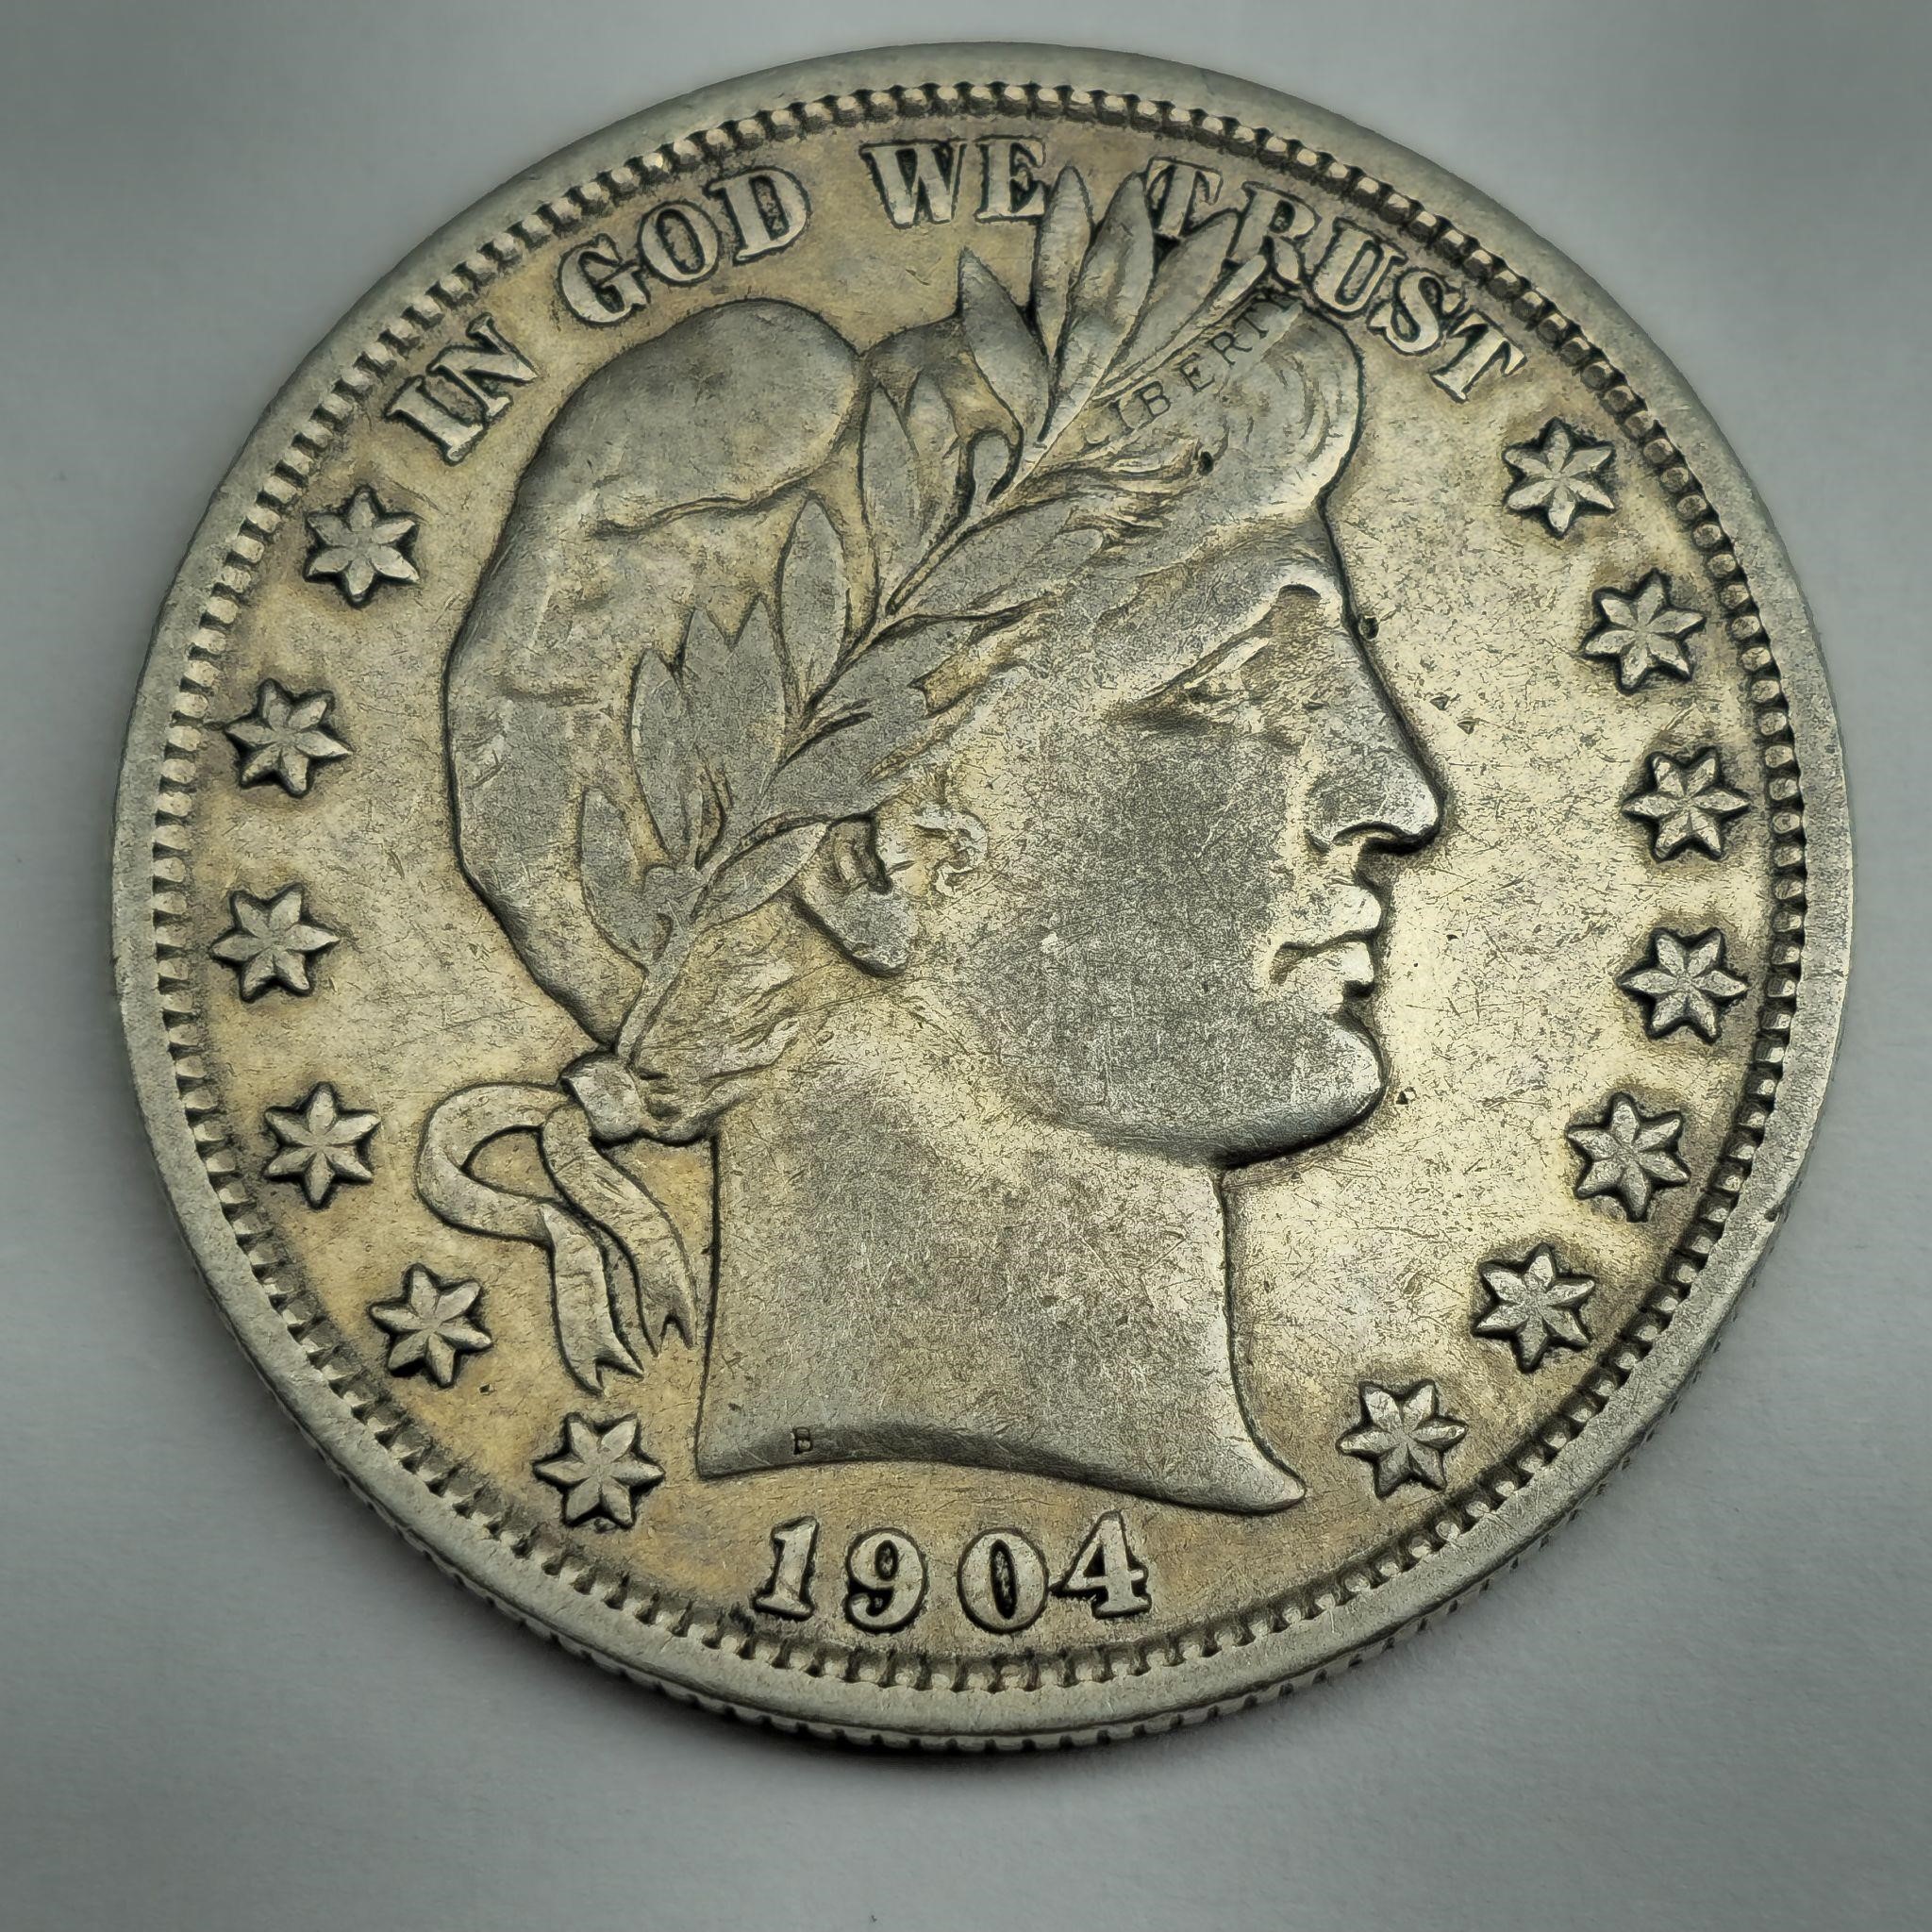 1904 Barber 50c Silver Half Dollar. Very nice coin